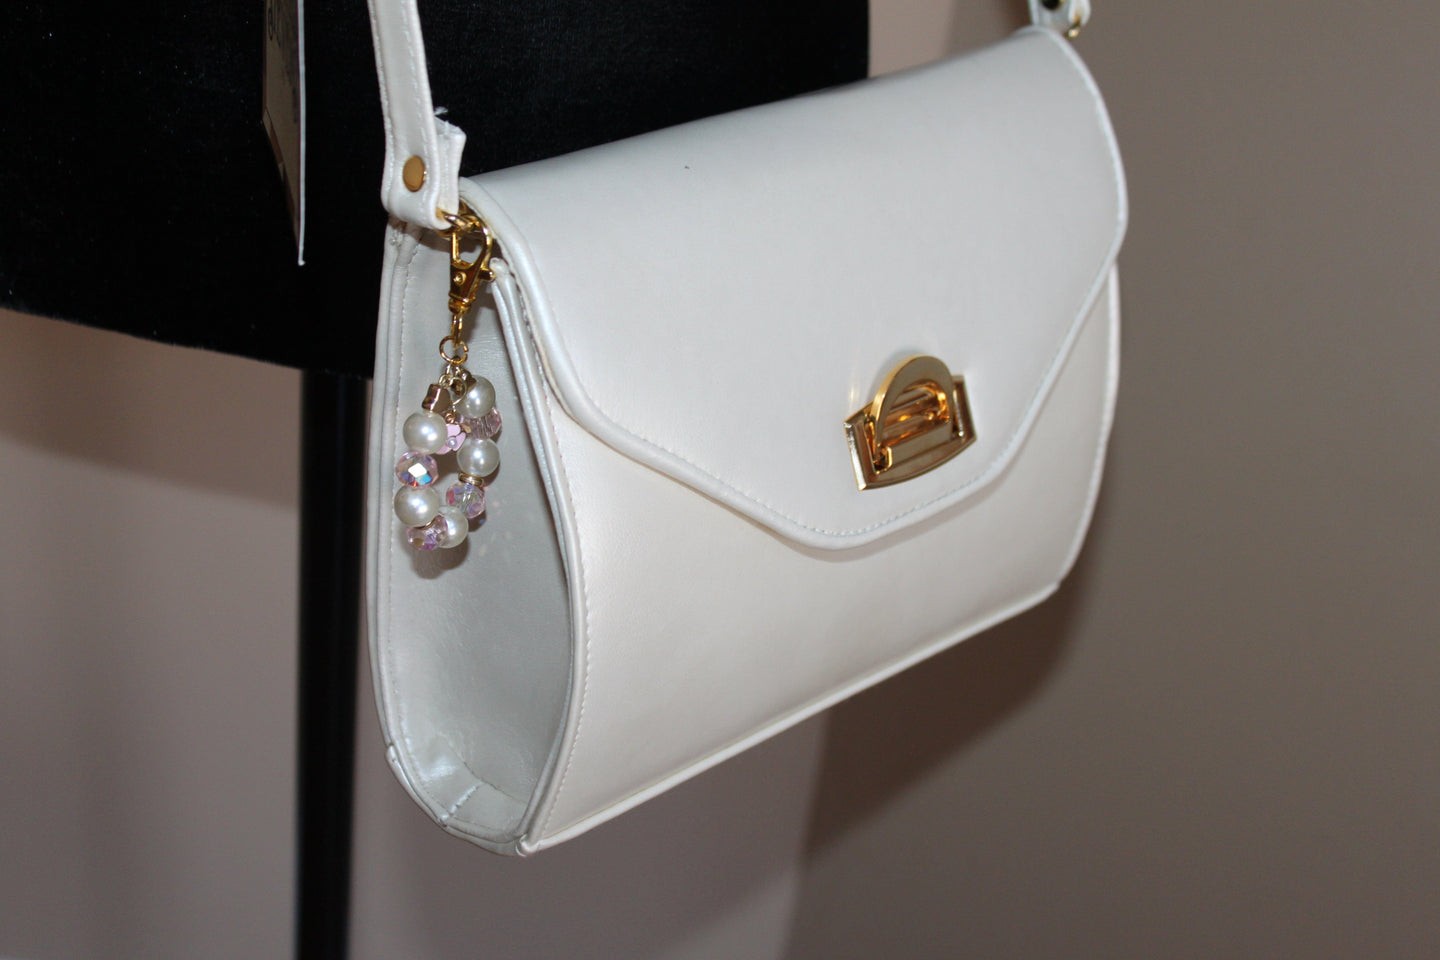 Crossbody Bag - Cream fashion handbag with adjustable strap and pretty bag charm - gold elements HB060